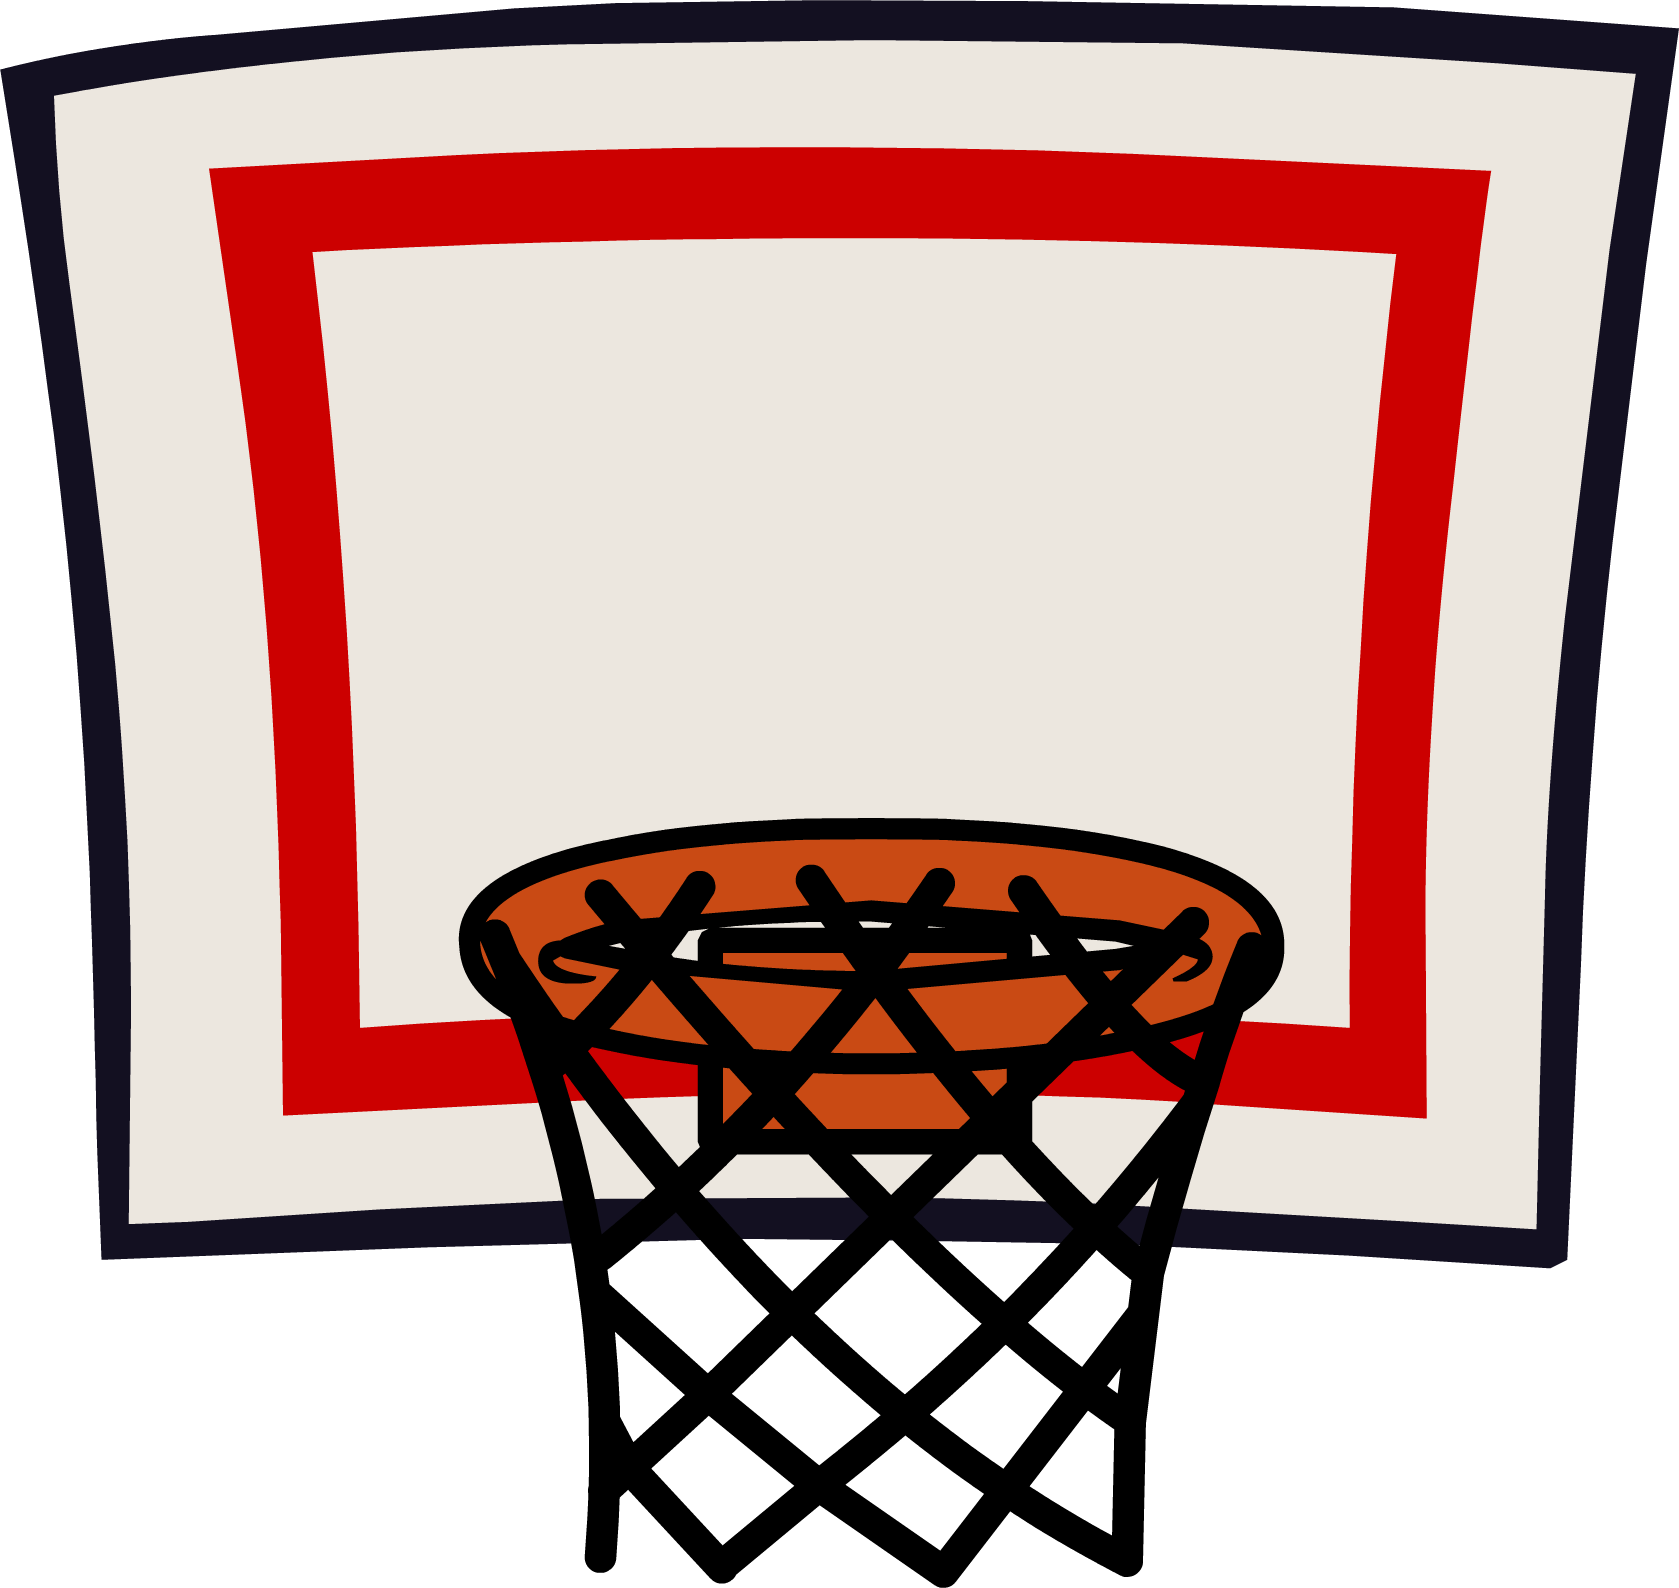 Basketball board ring clipart png - ClipartFox